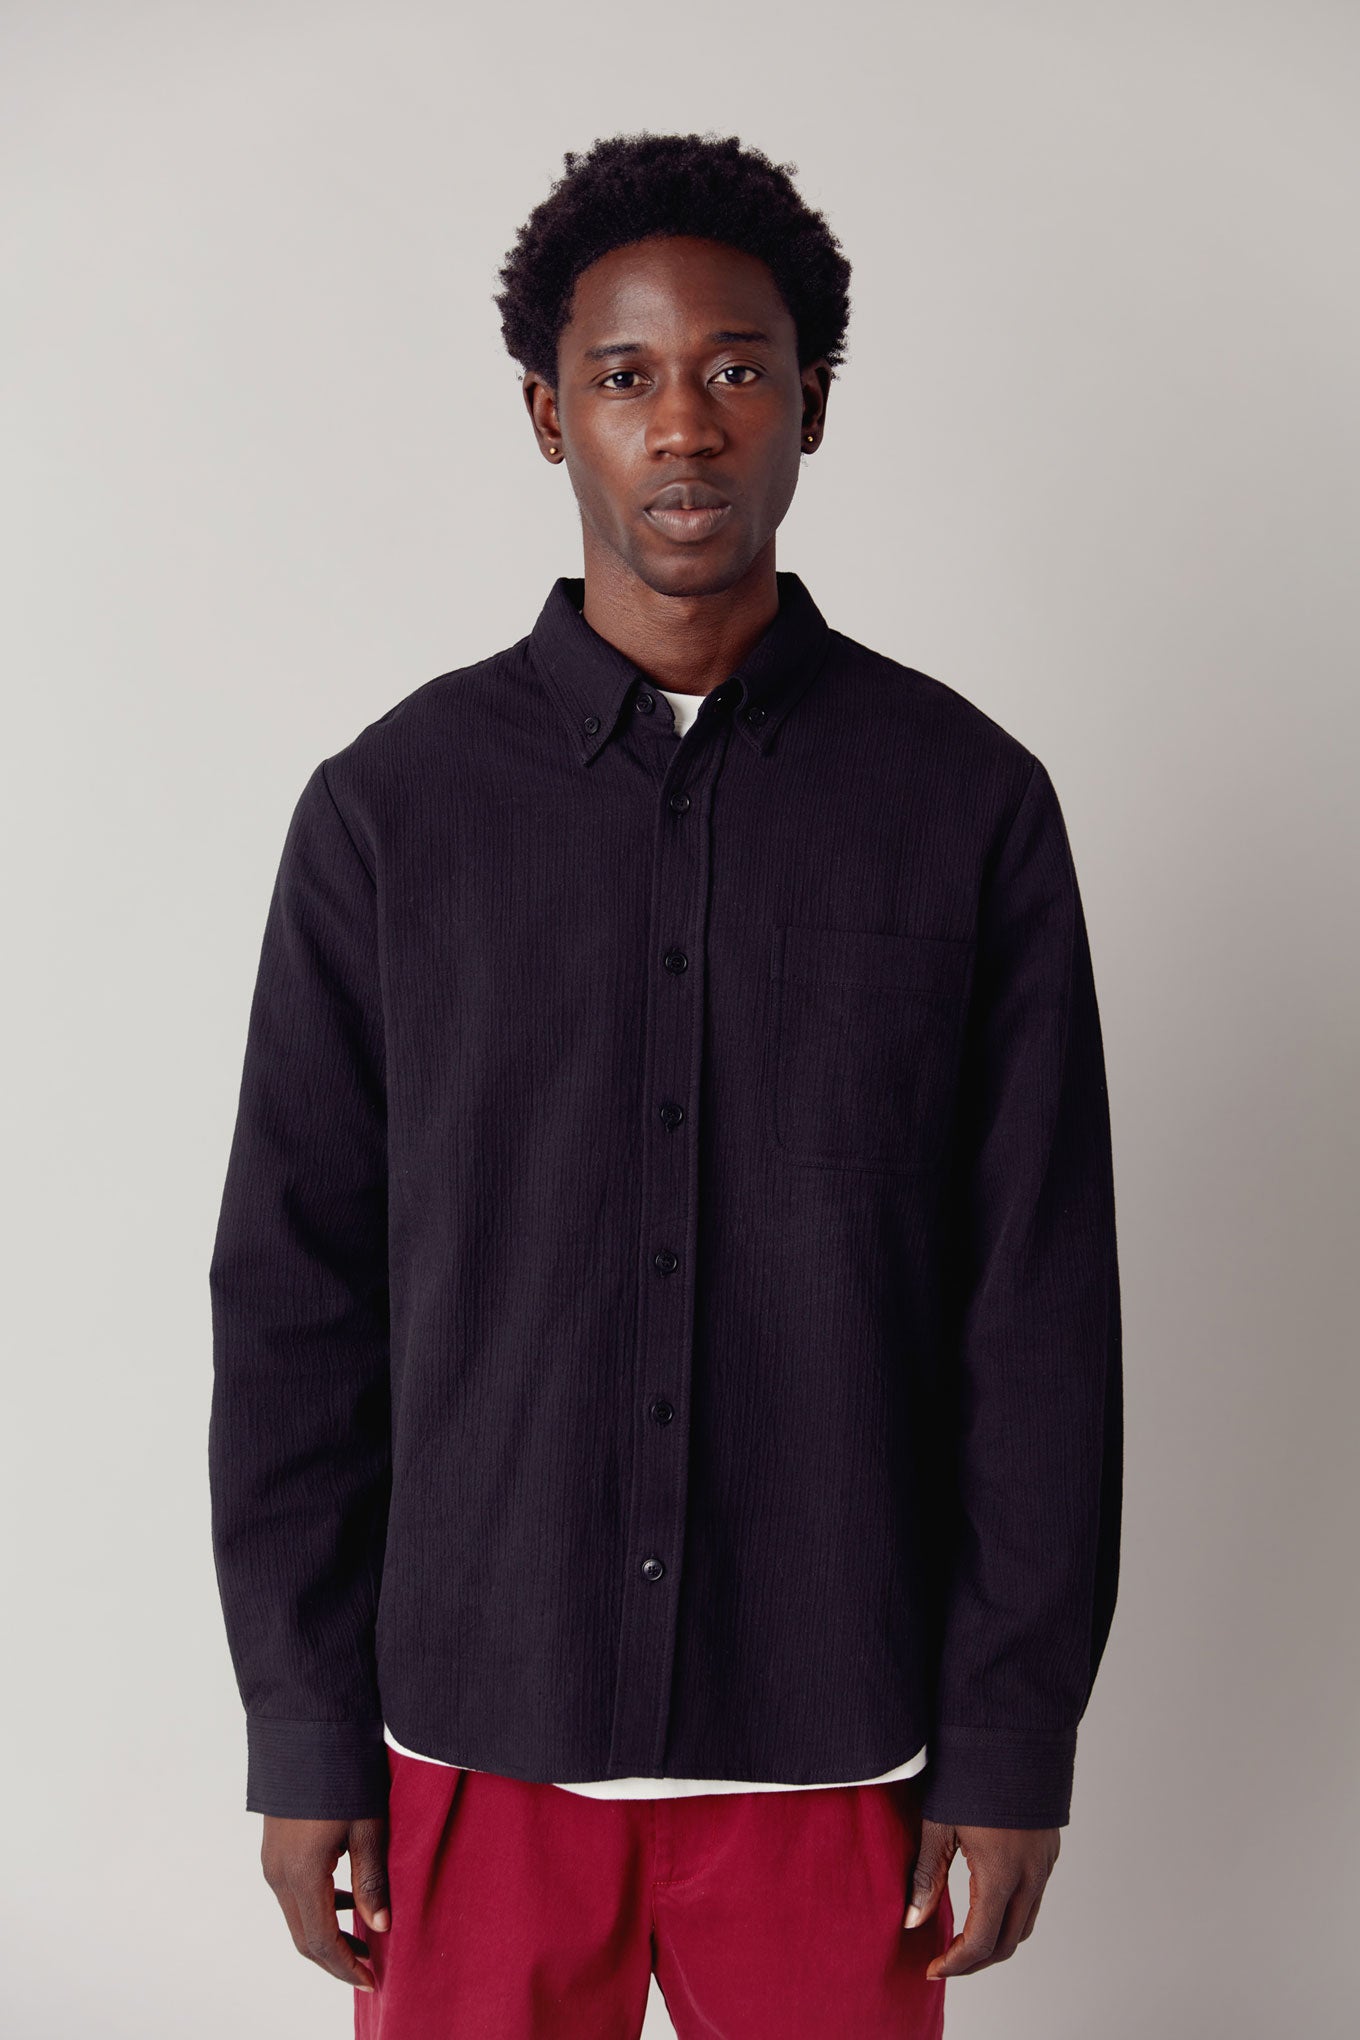 SPECTRE - Organic Cotton Shirt Black